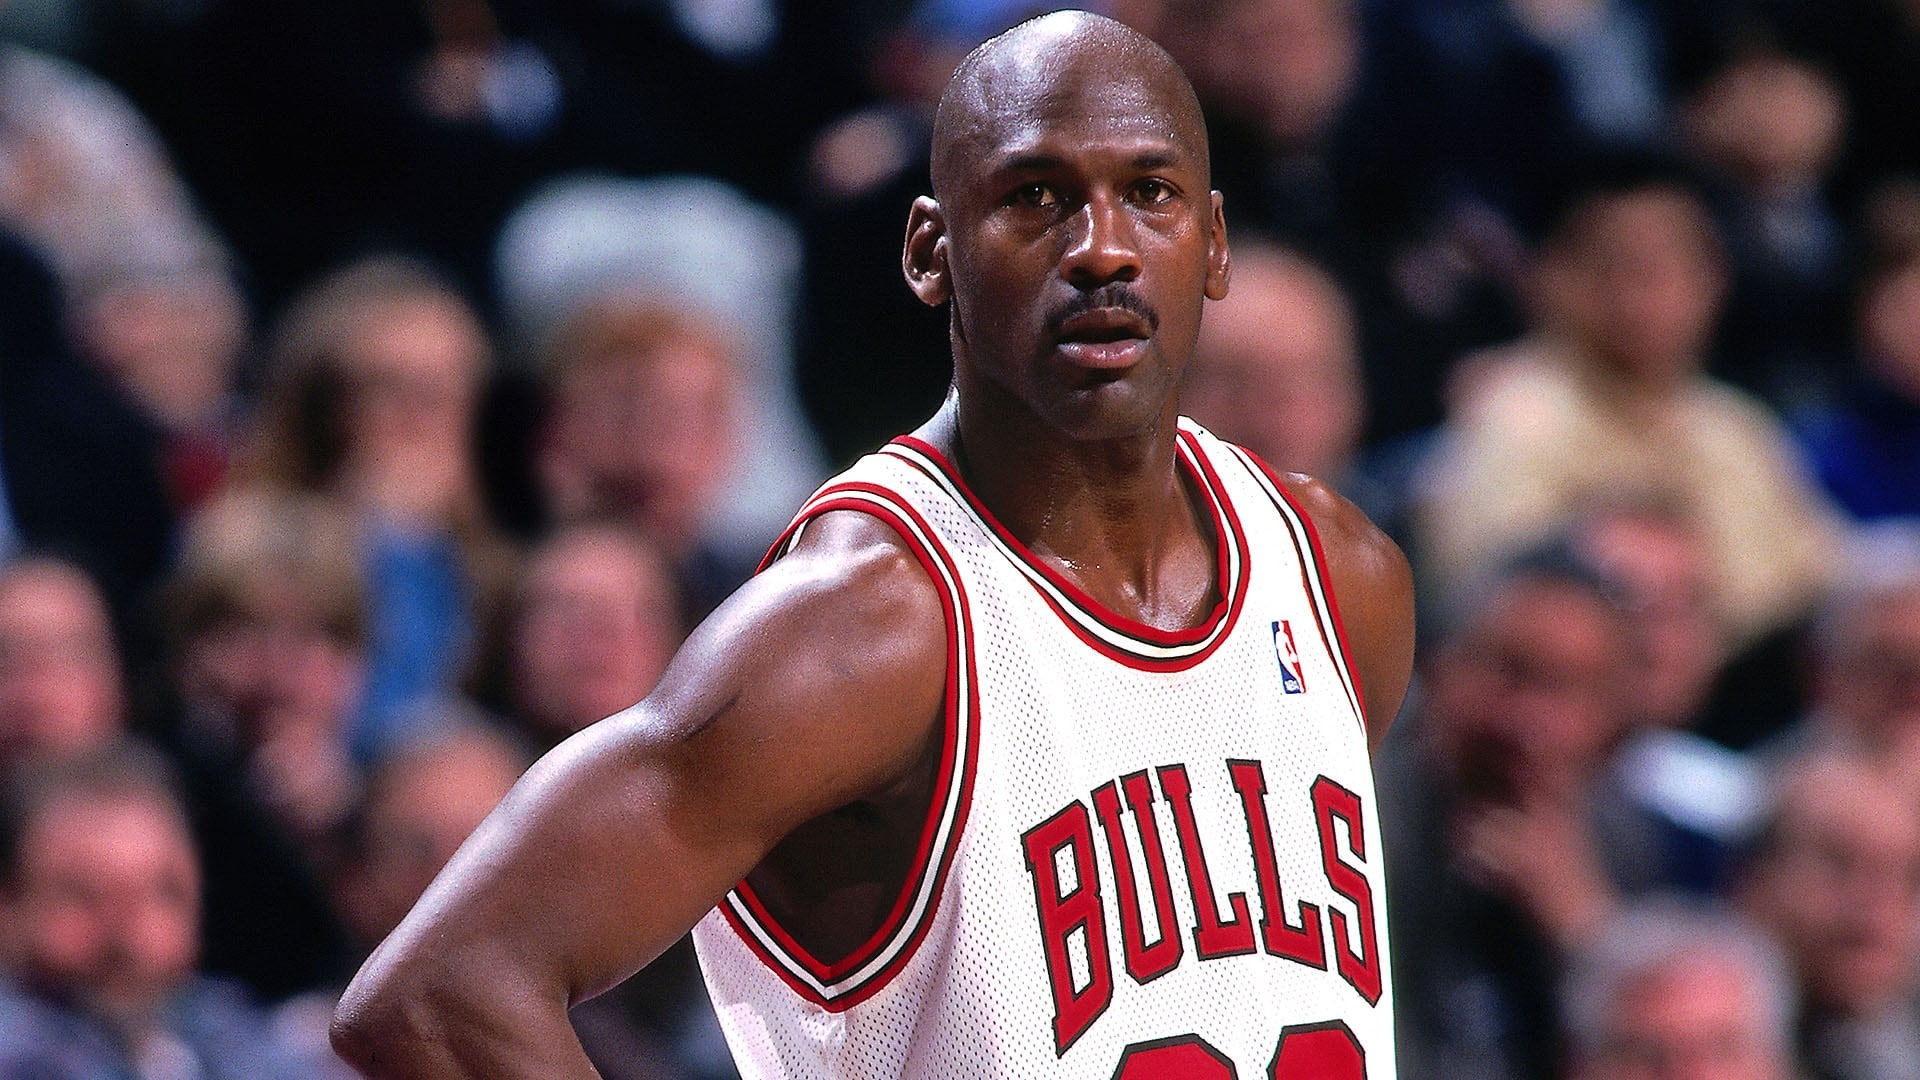 The Shocking Retirement of Michael Jordan